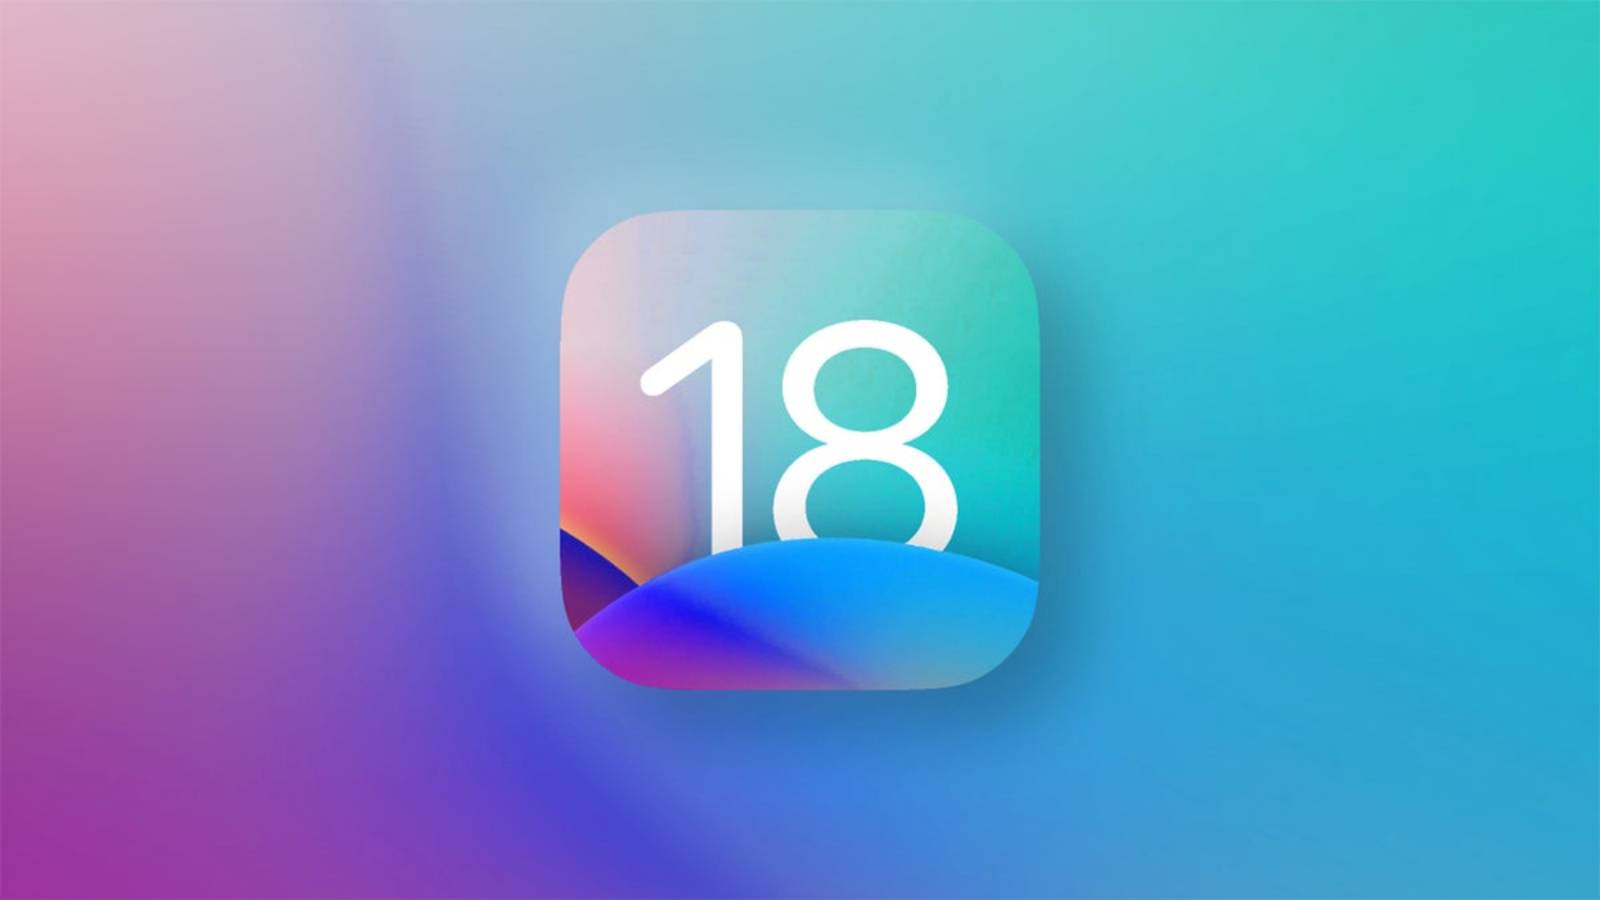 iOS 18-kompatibel många modeller Gamla iPhone-telefoner